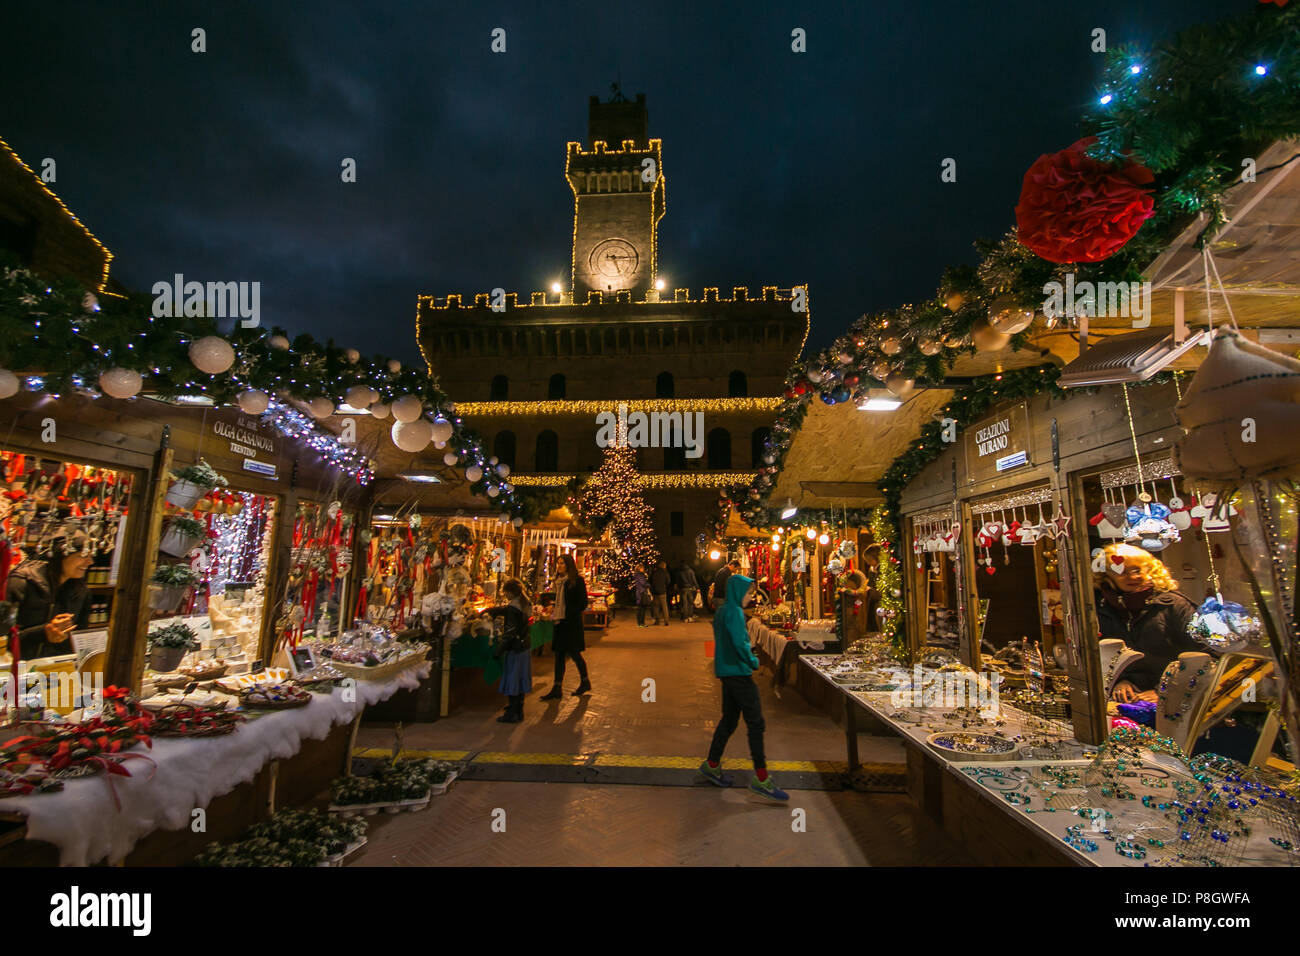 MONTEPULCIANO, ITALY - NOVEMBER 18, 2017: Christmas market and ...